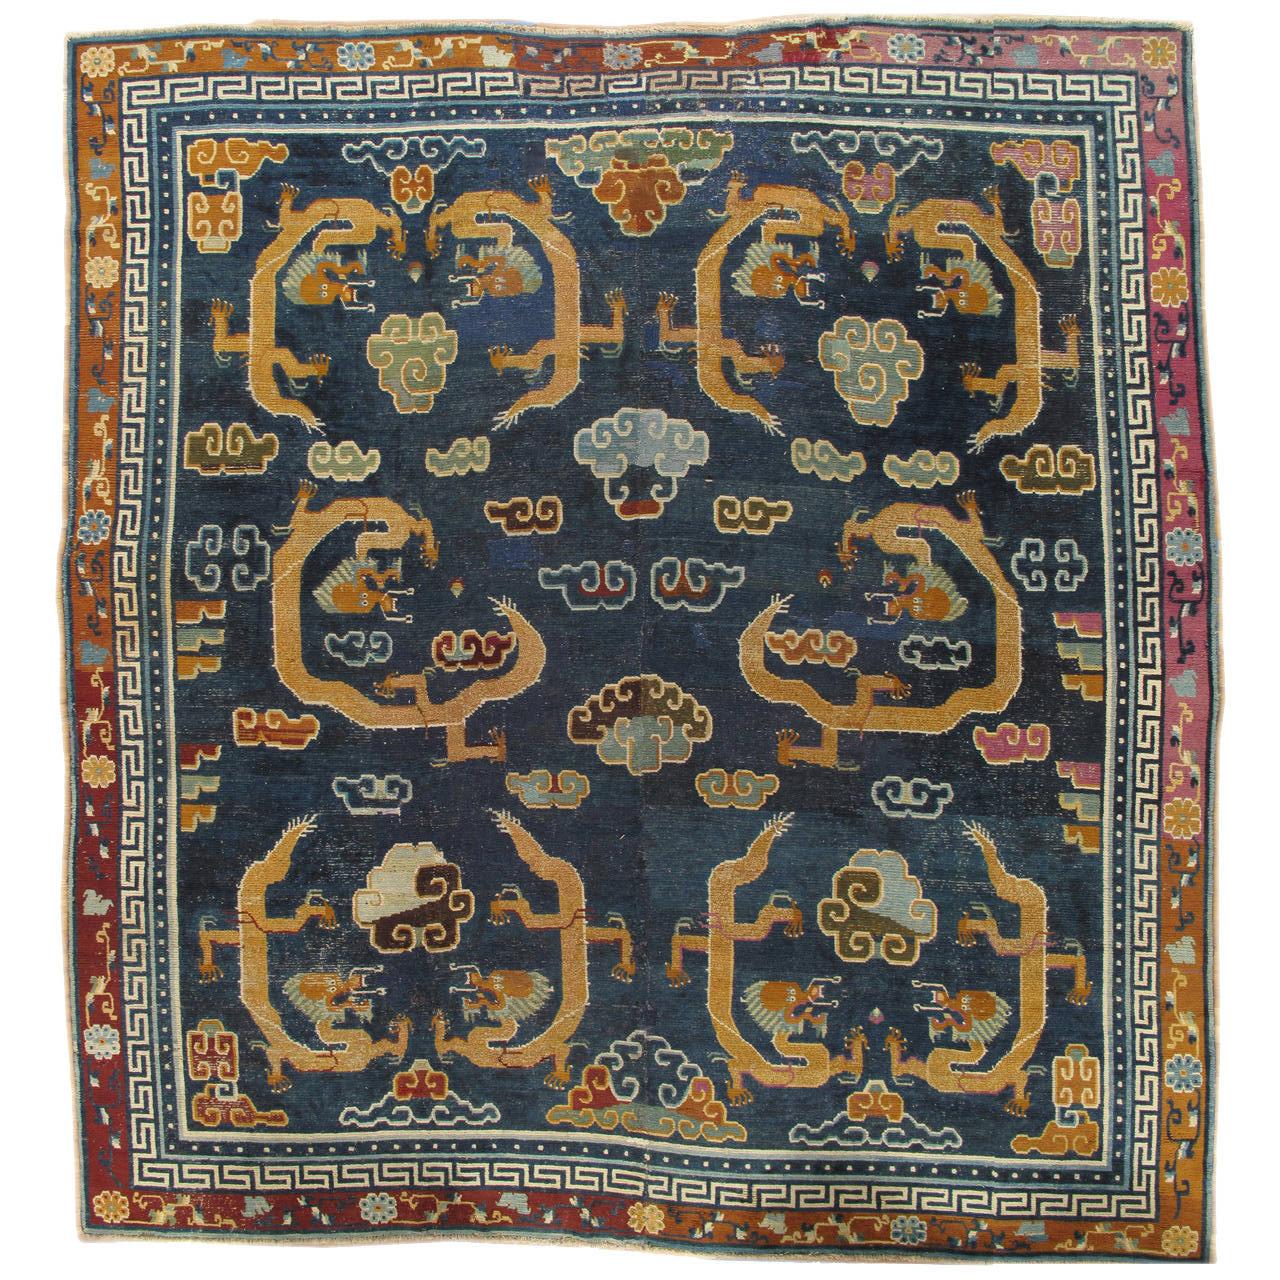 Antique Tibetan Carpet, Circa 1880 Handmade Oriental Rug, Blue, Gold, Tan, Cream